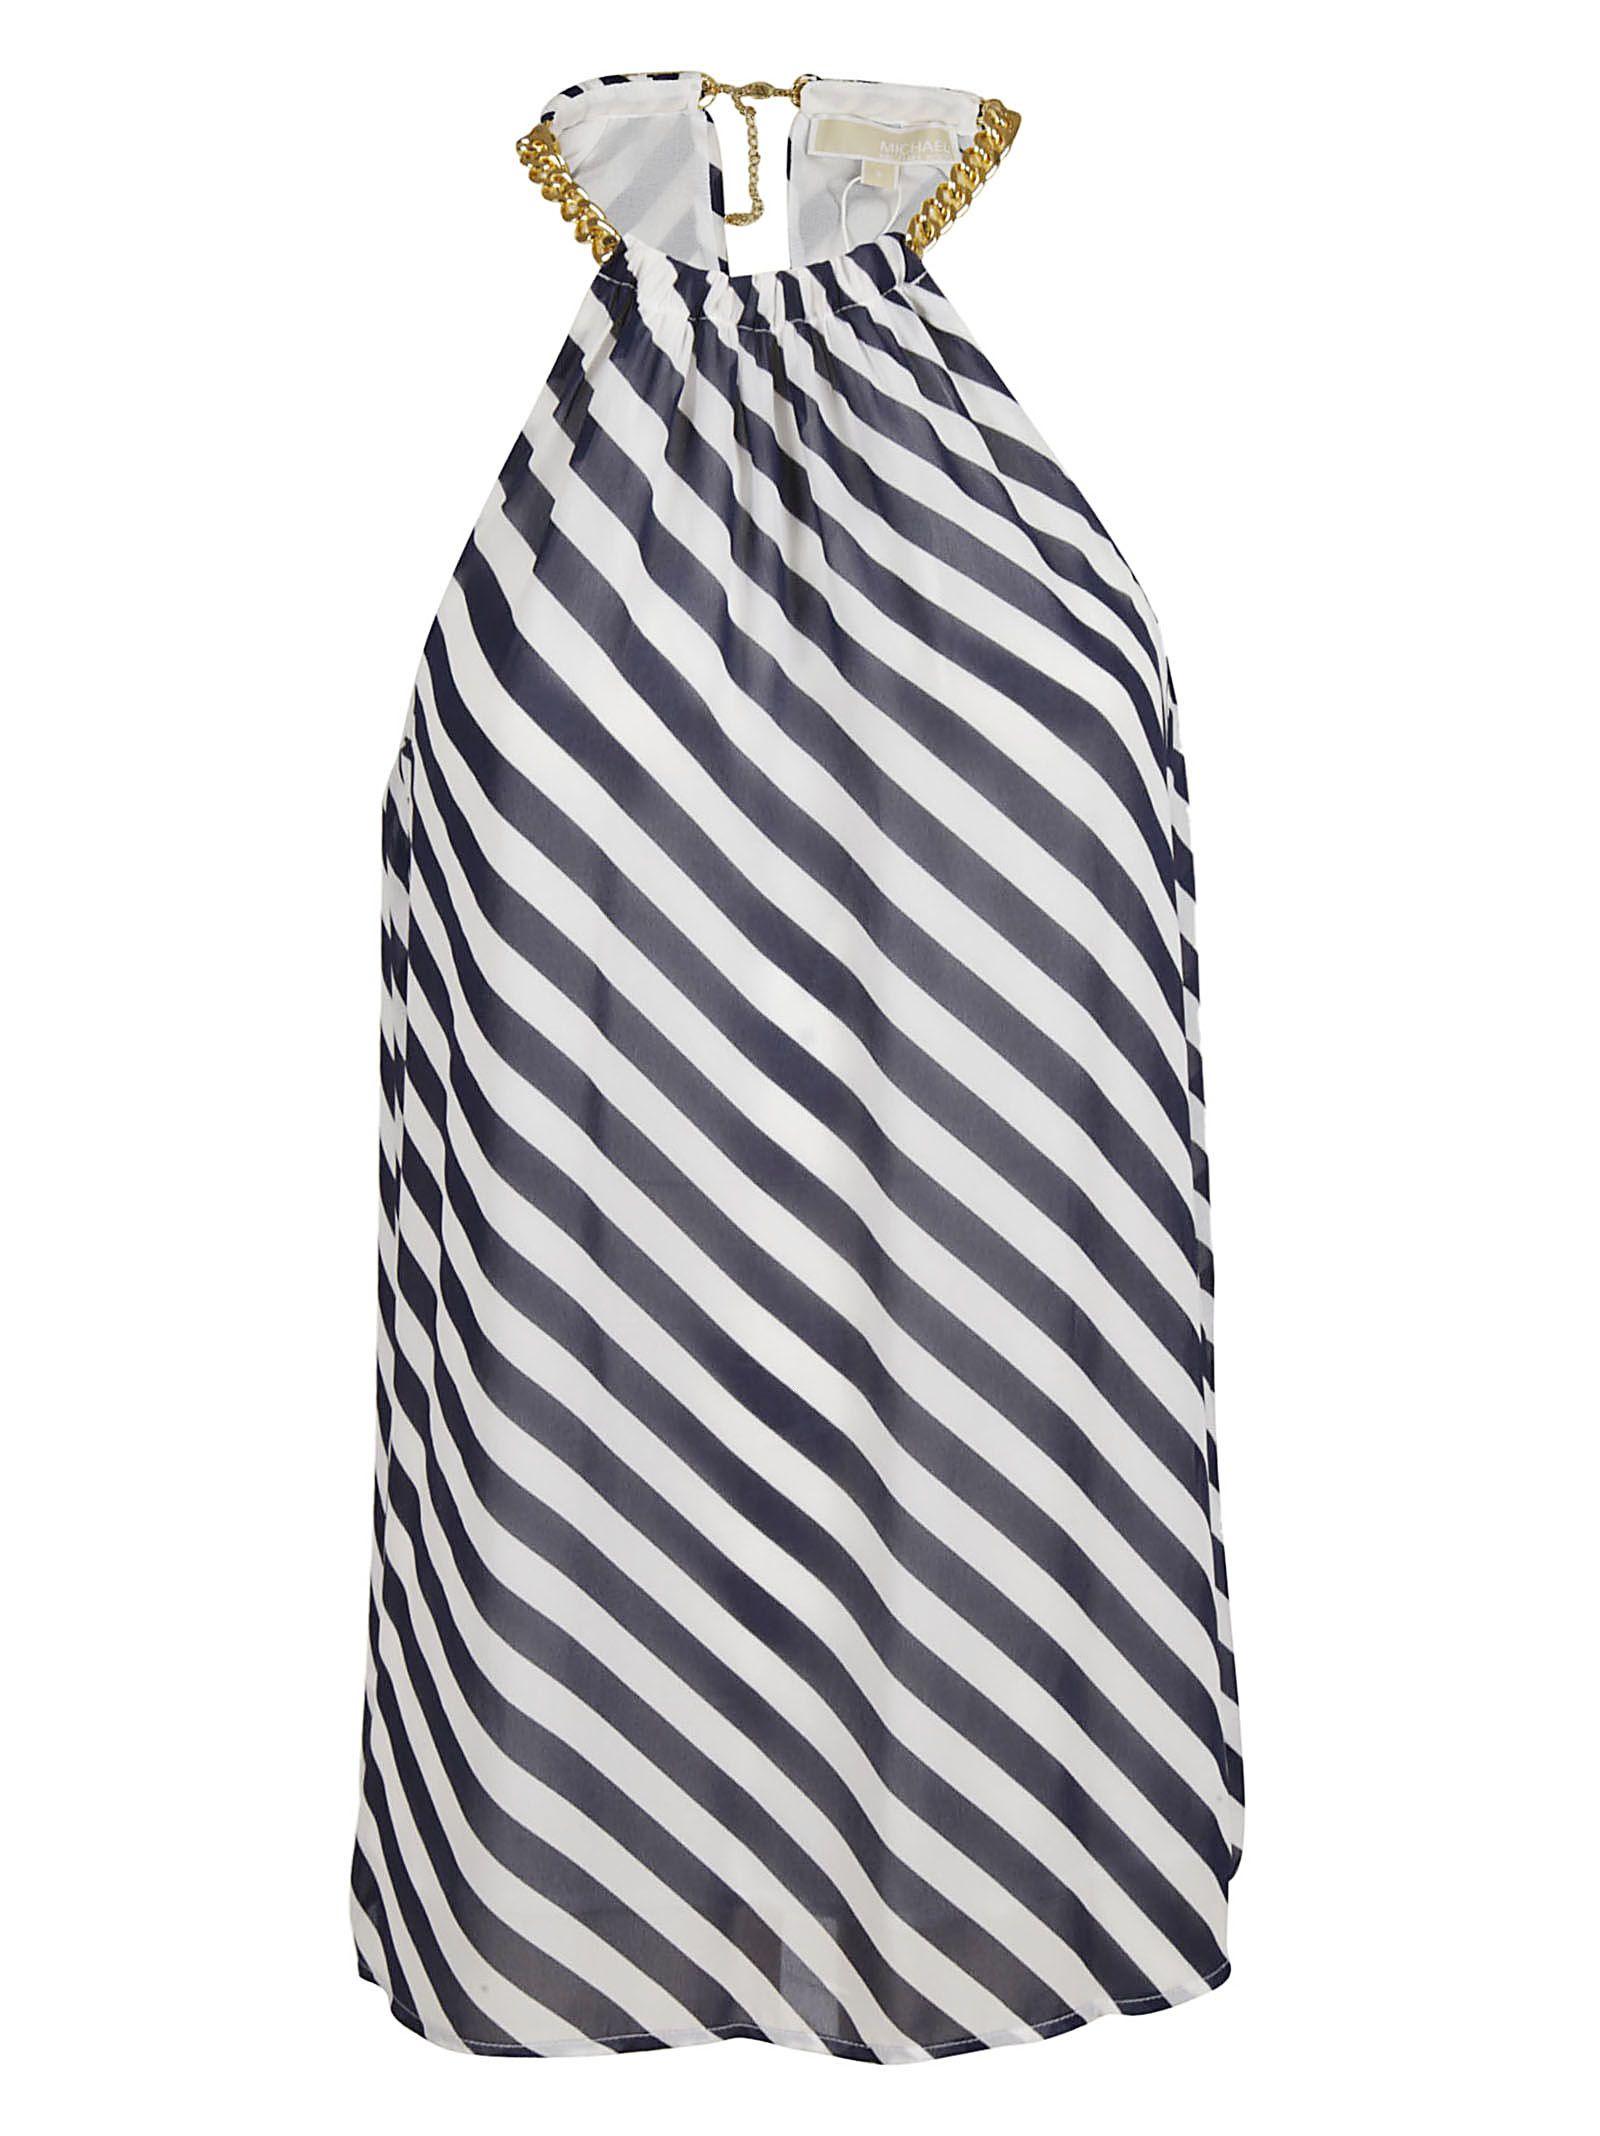 michael kors blue and white striped dress